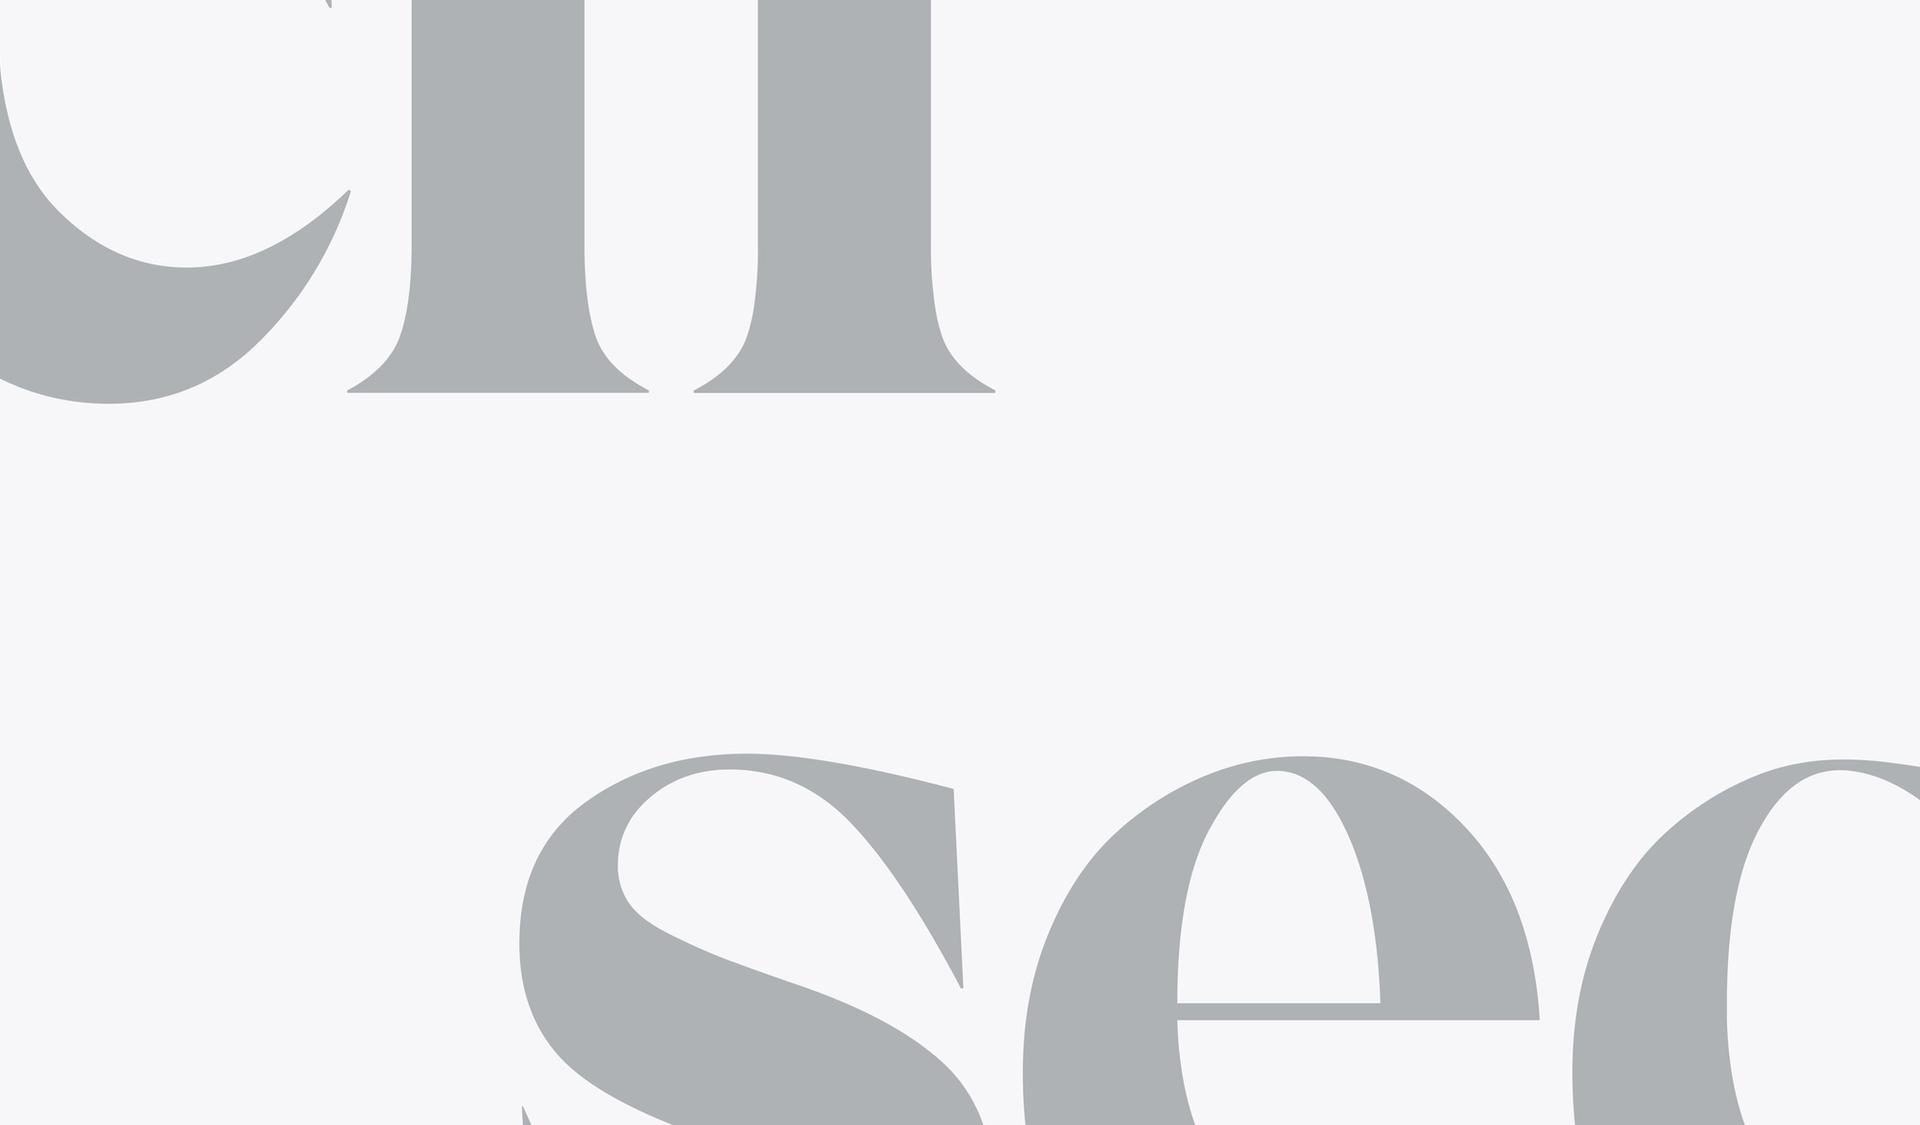 Abstract Secfi logo graphic